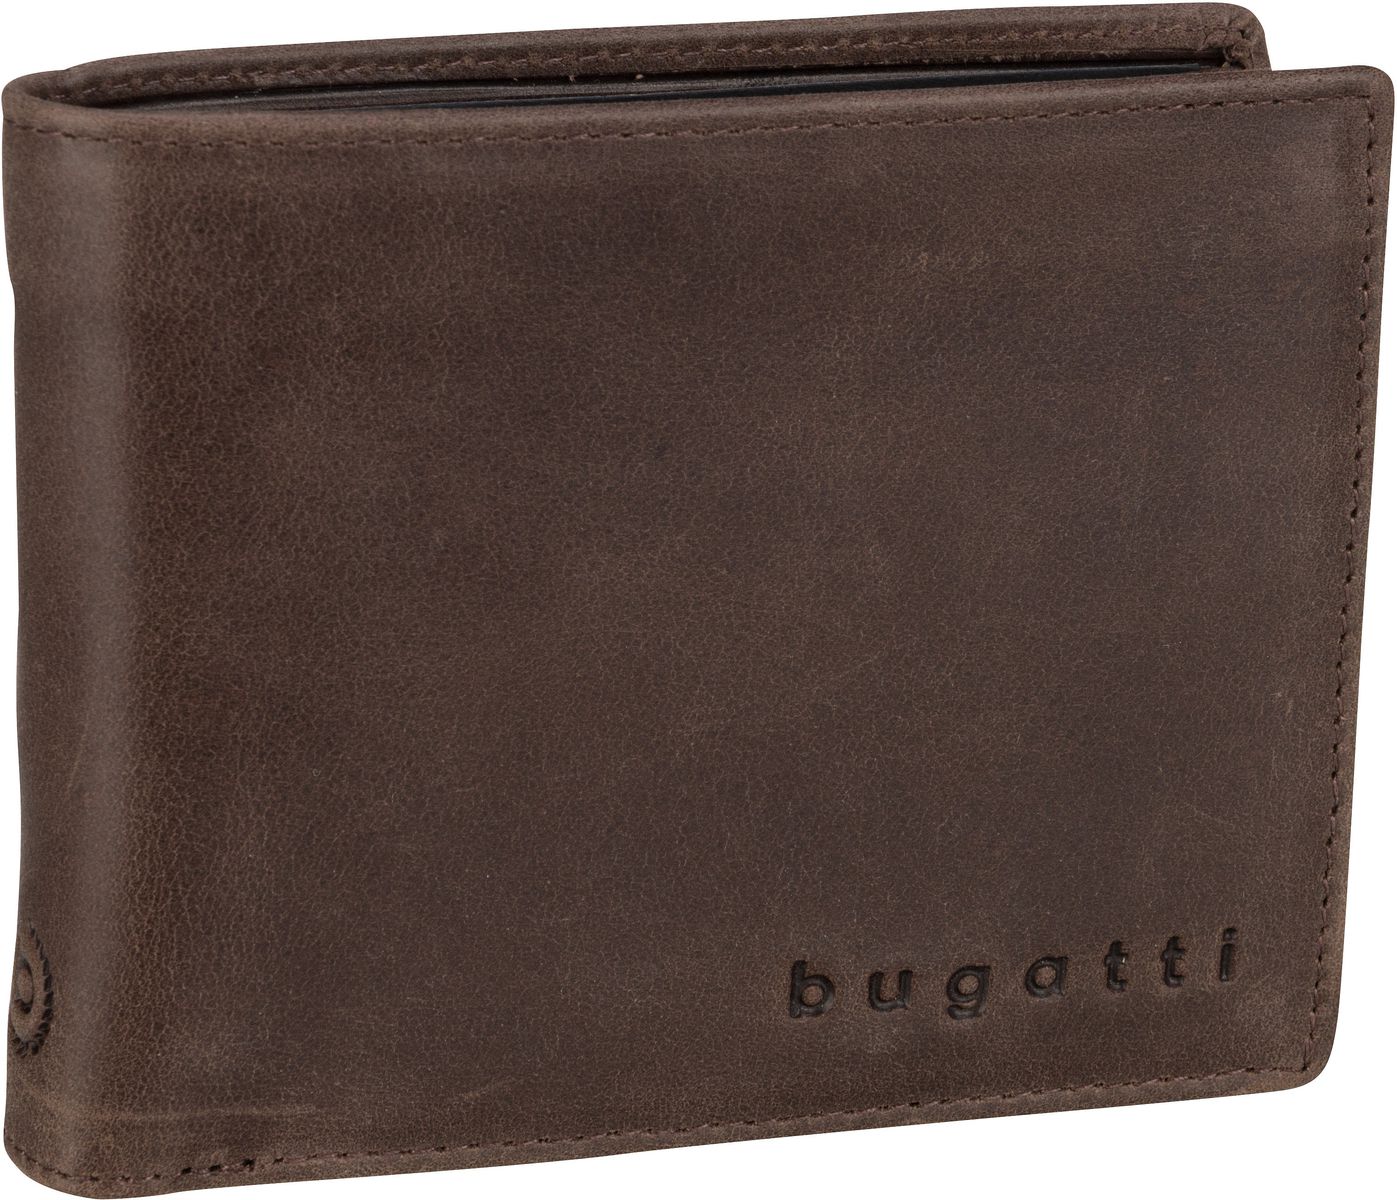 Bugatti Volo Coin Wallet 12 Kartenfächer - Braun